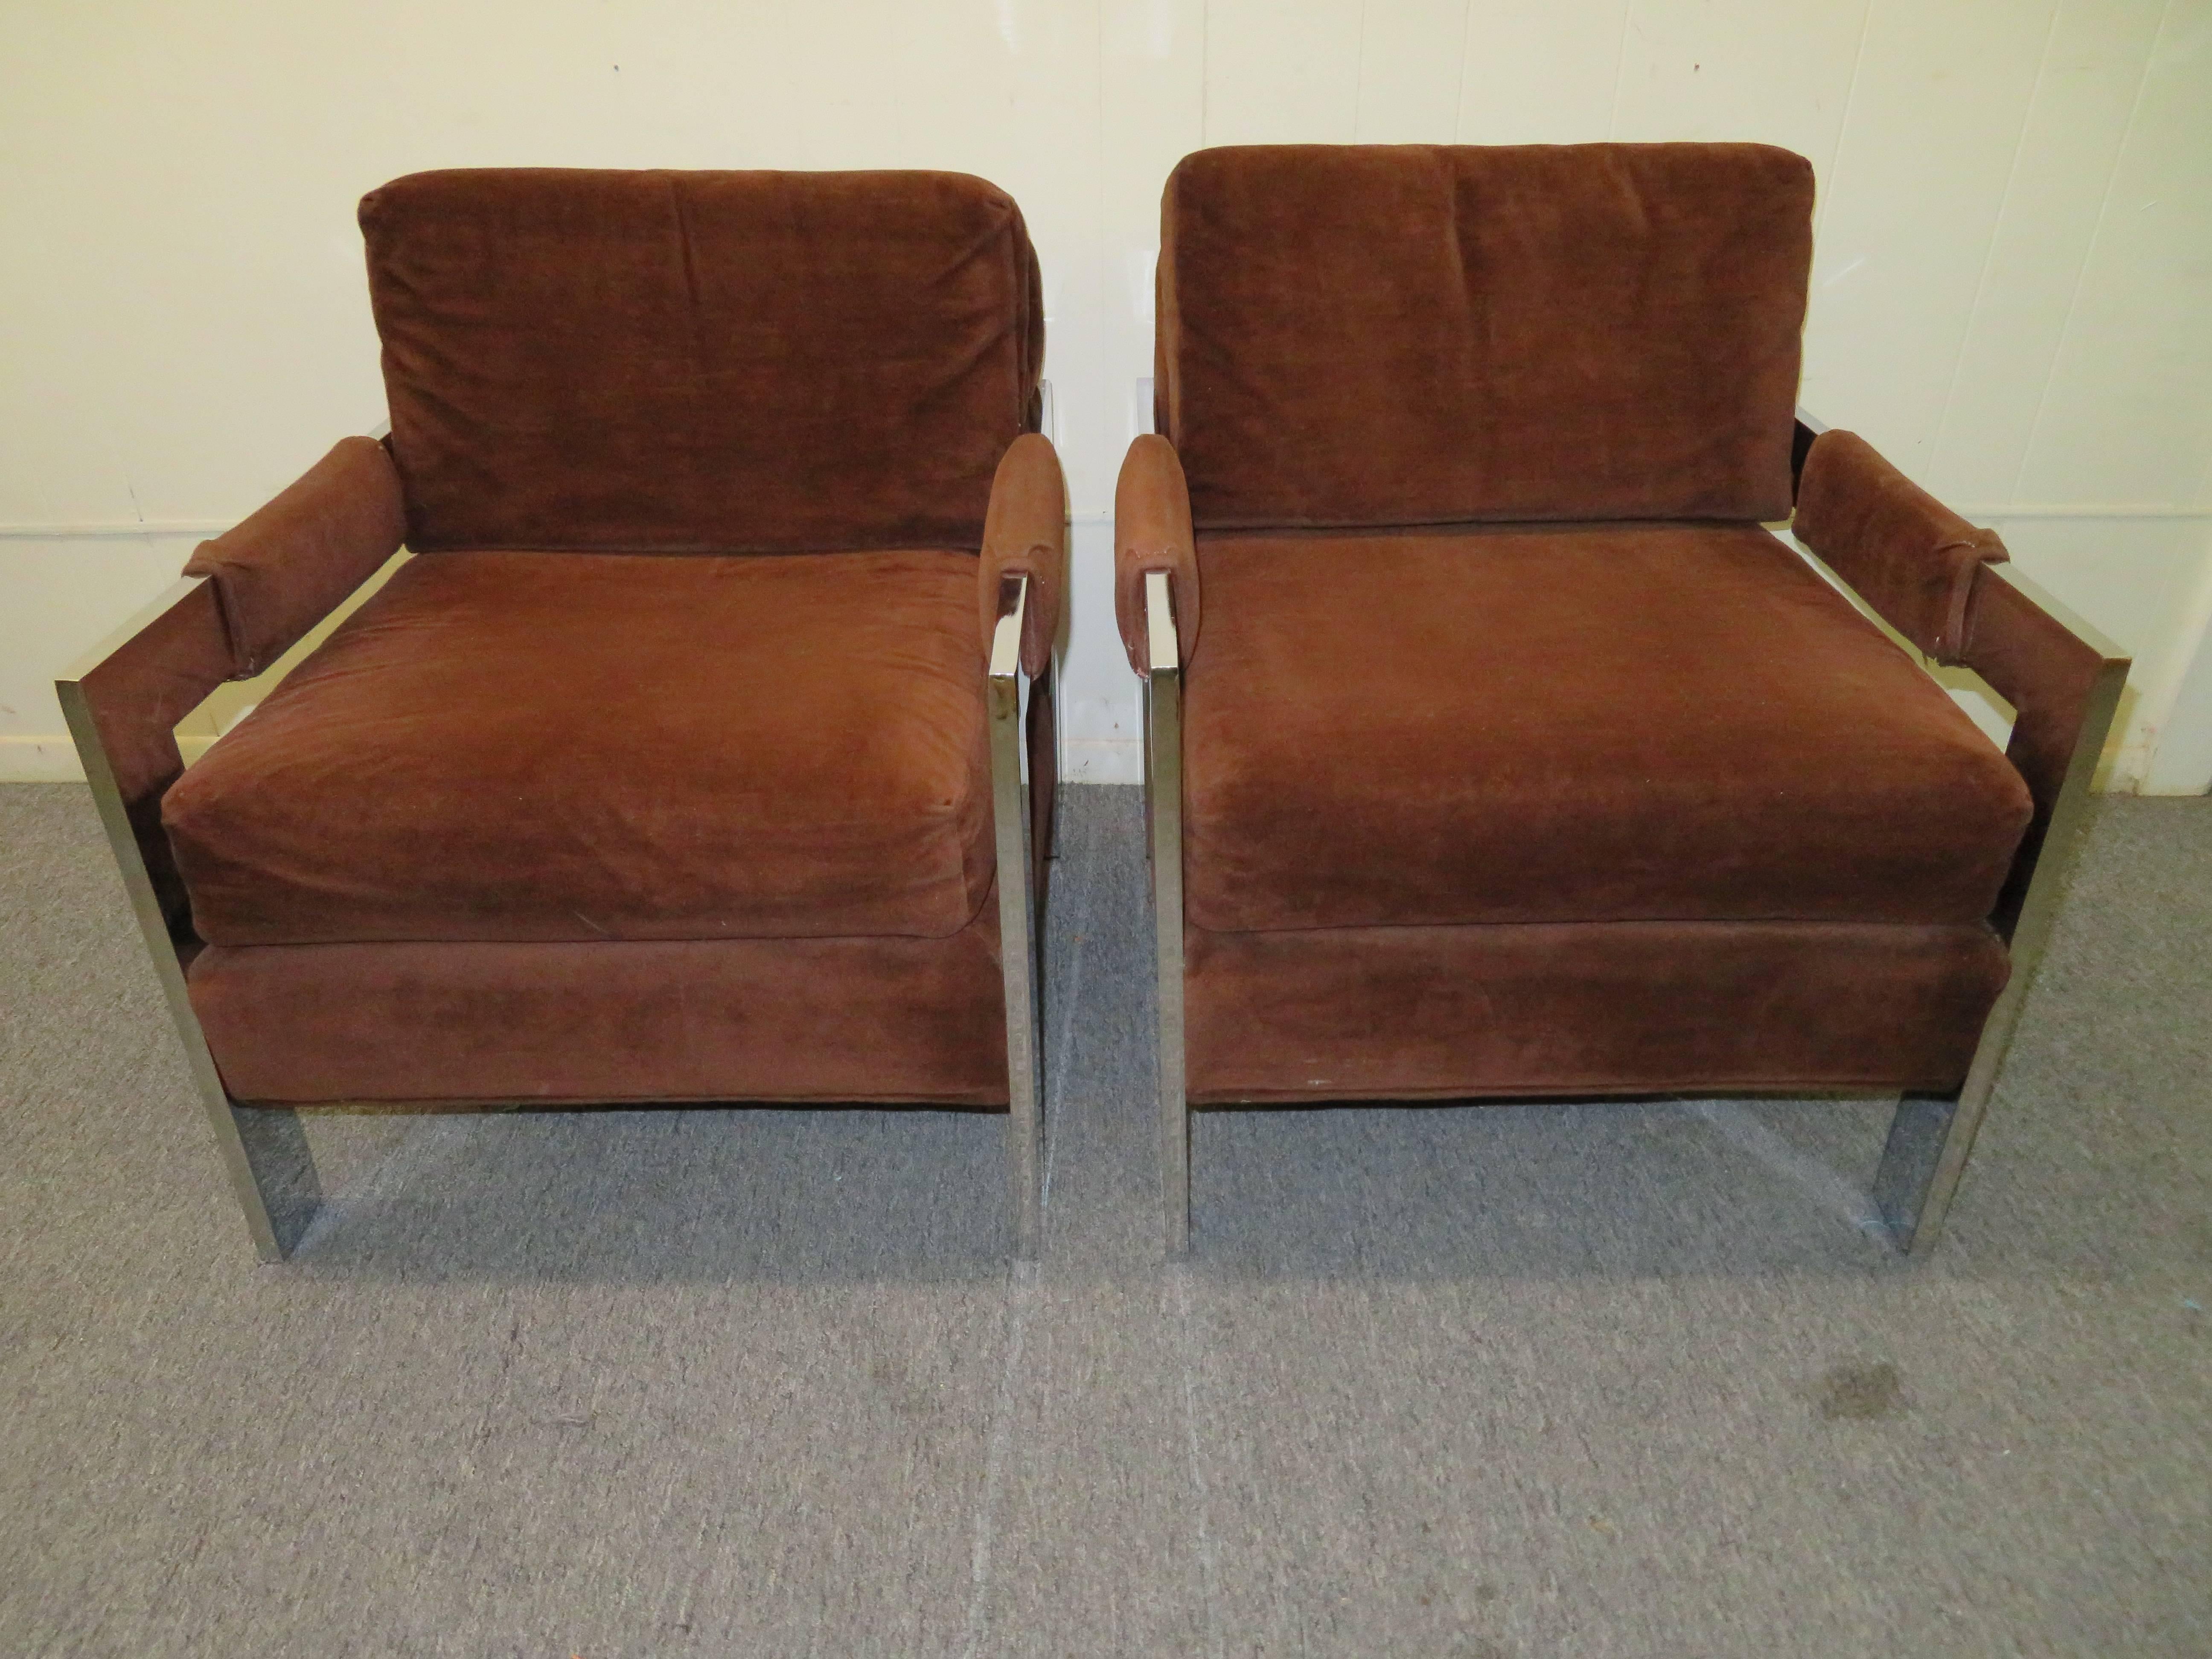 Chunky Chrome Pair Milo Baughman StyleLounge Chairs, Mid-Century Modern For Sale 1